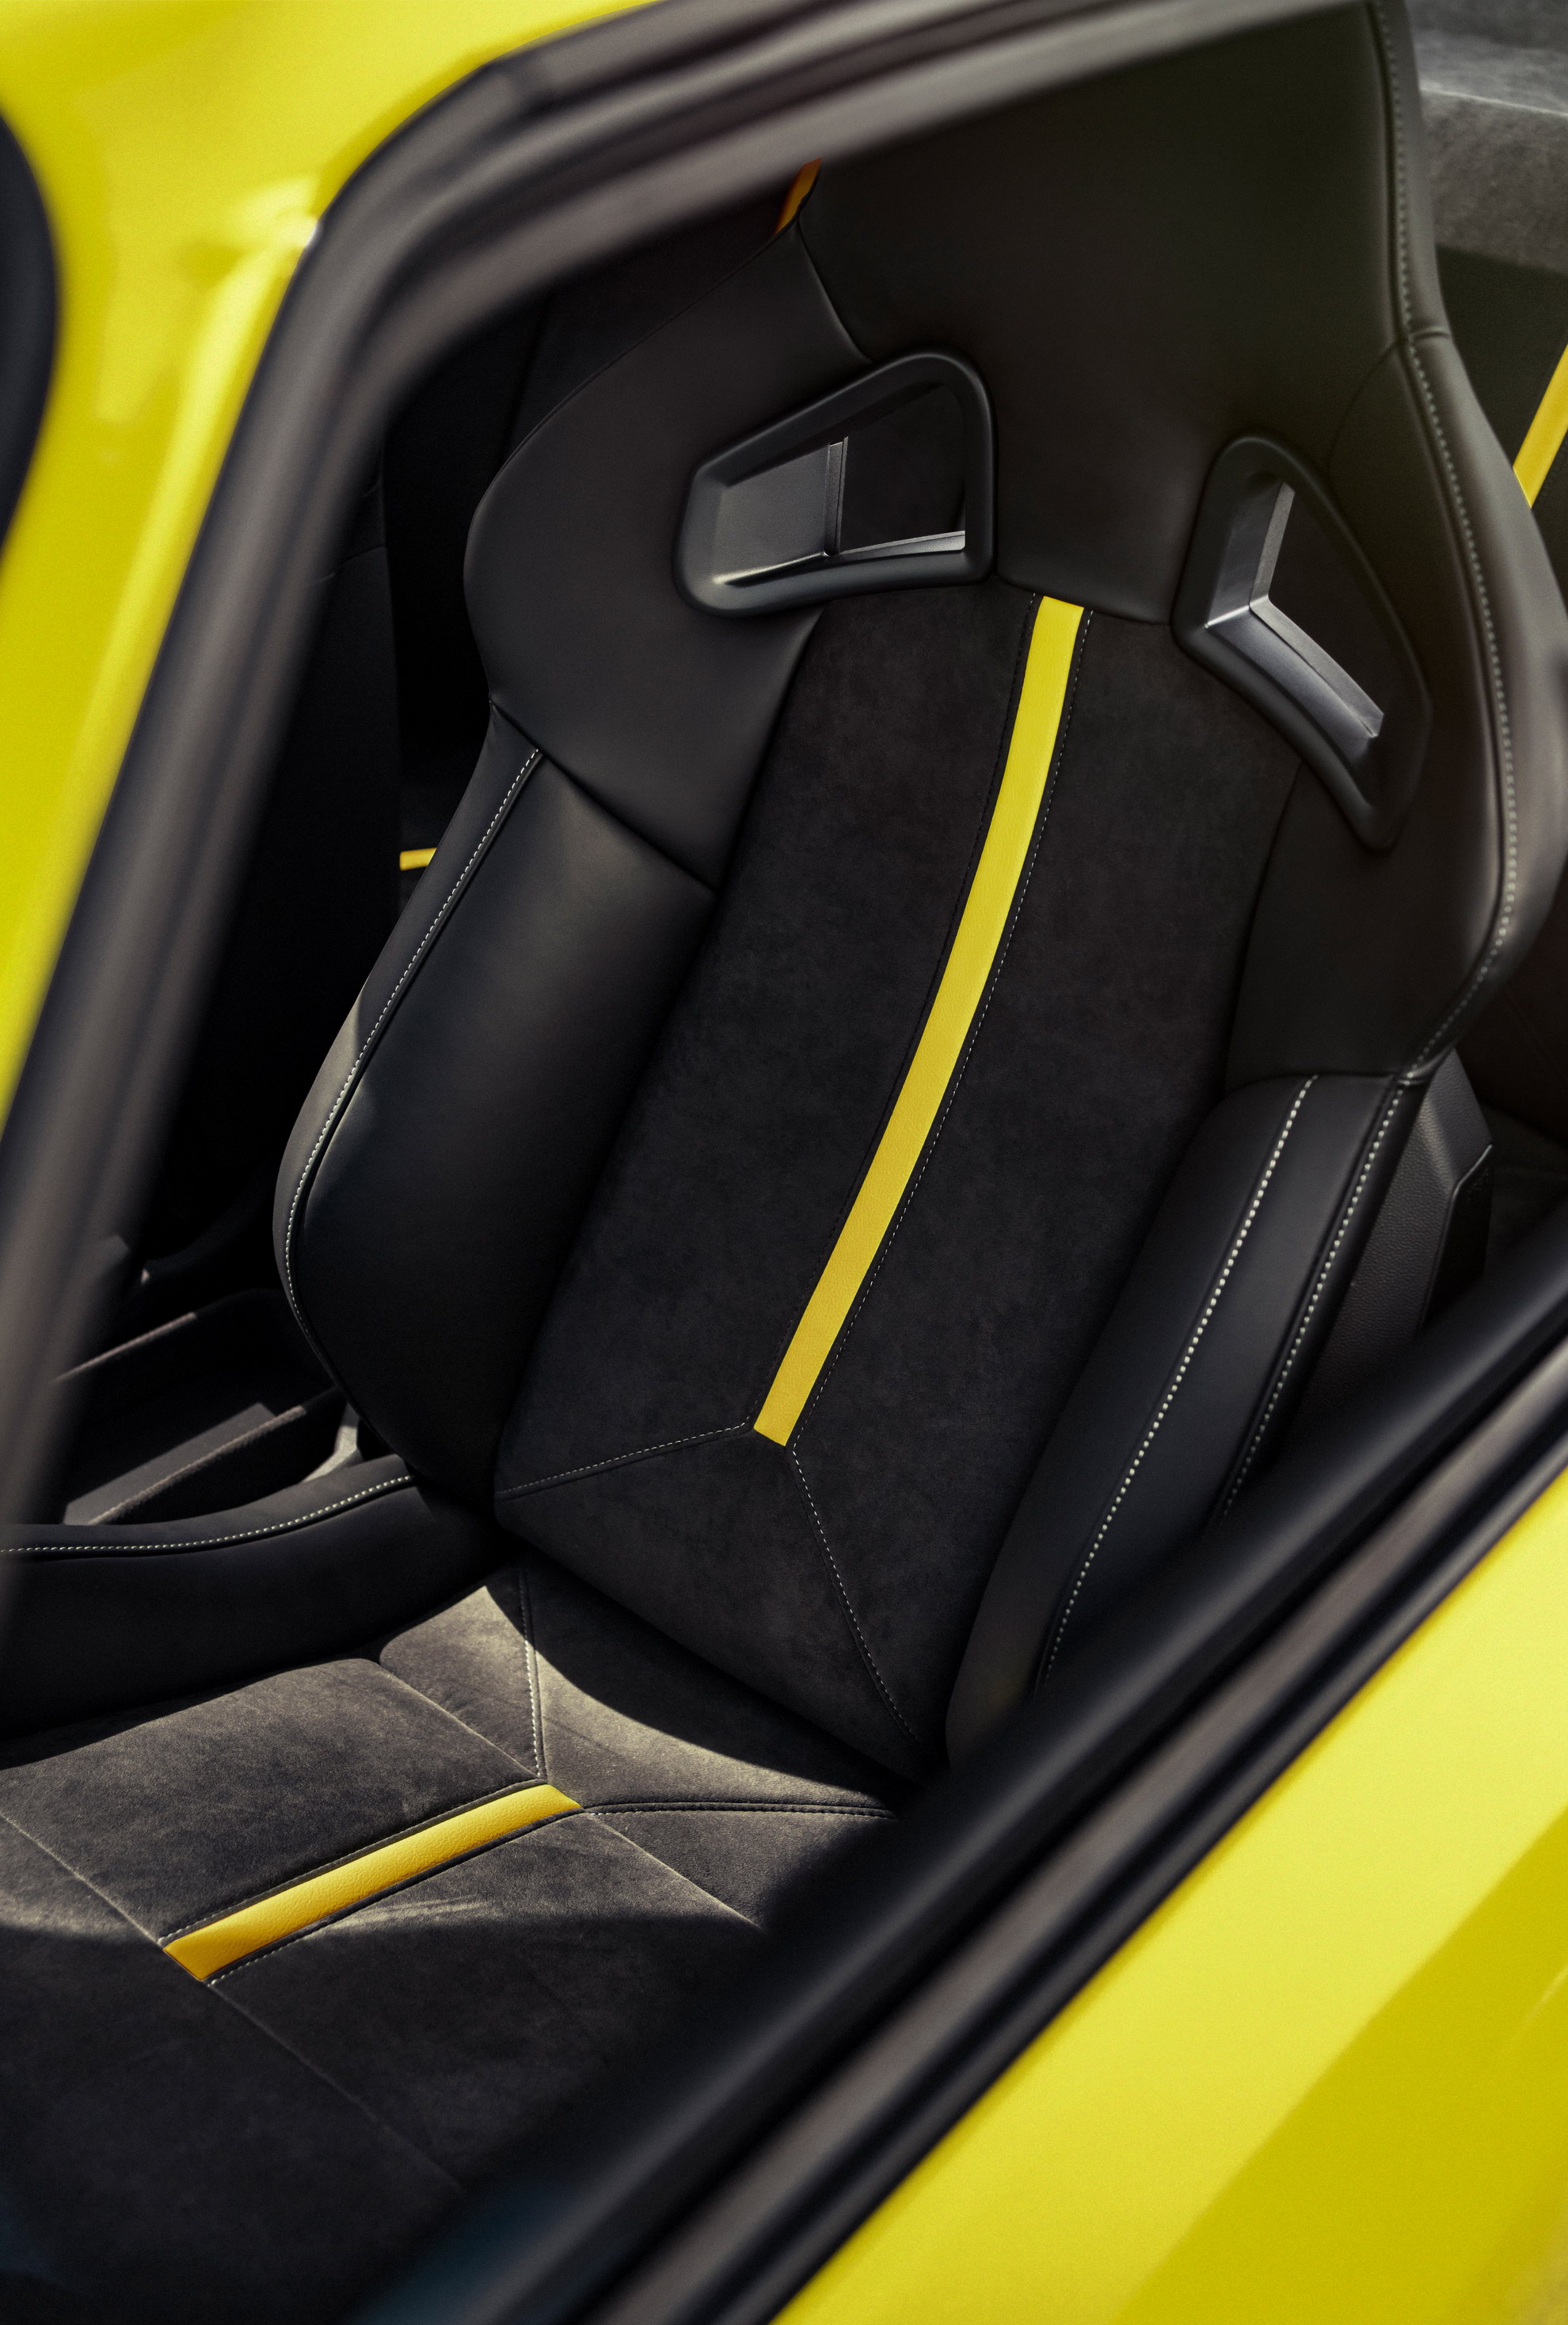 2021 Opel Manta GSe ElektroMOD Concept Interior Seats Wallpapers #25 of 27